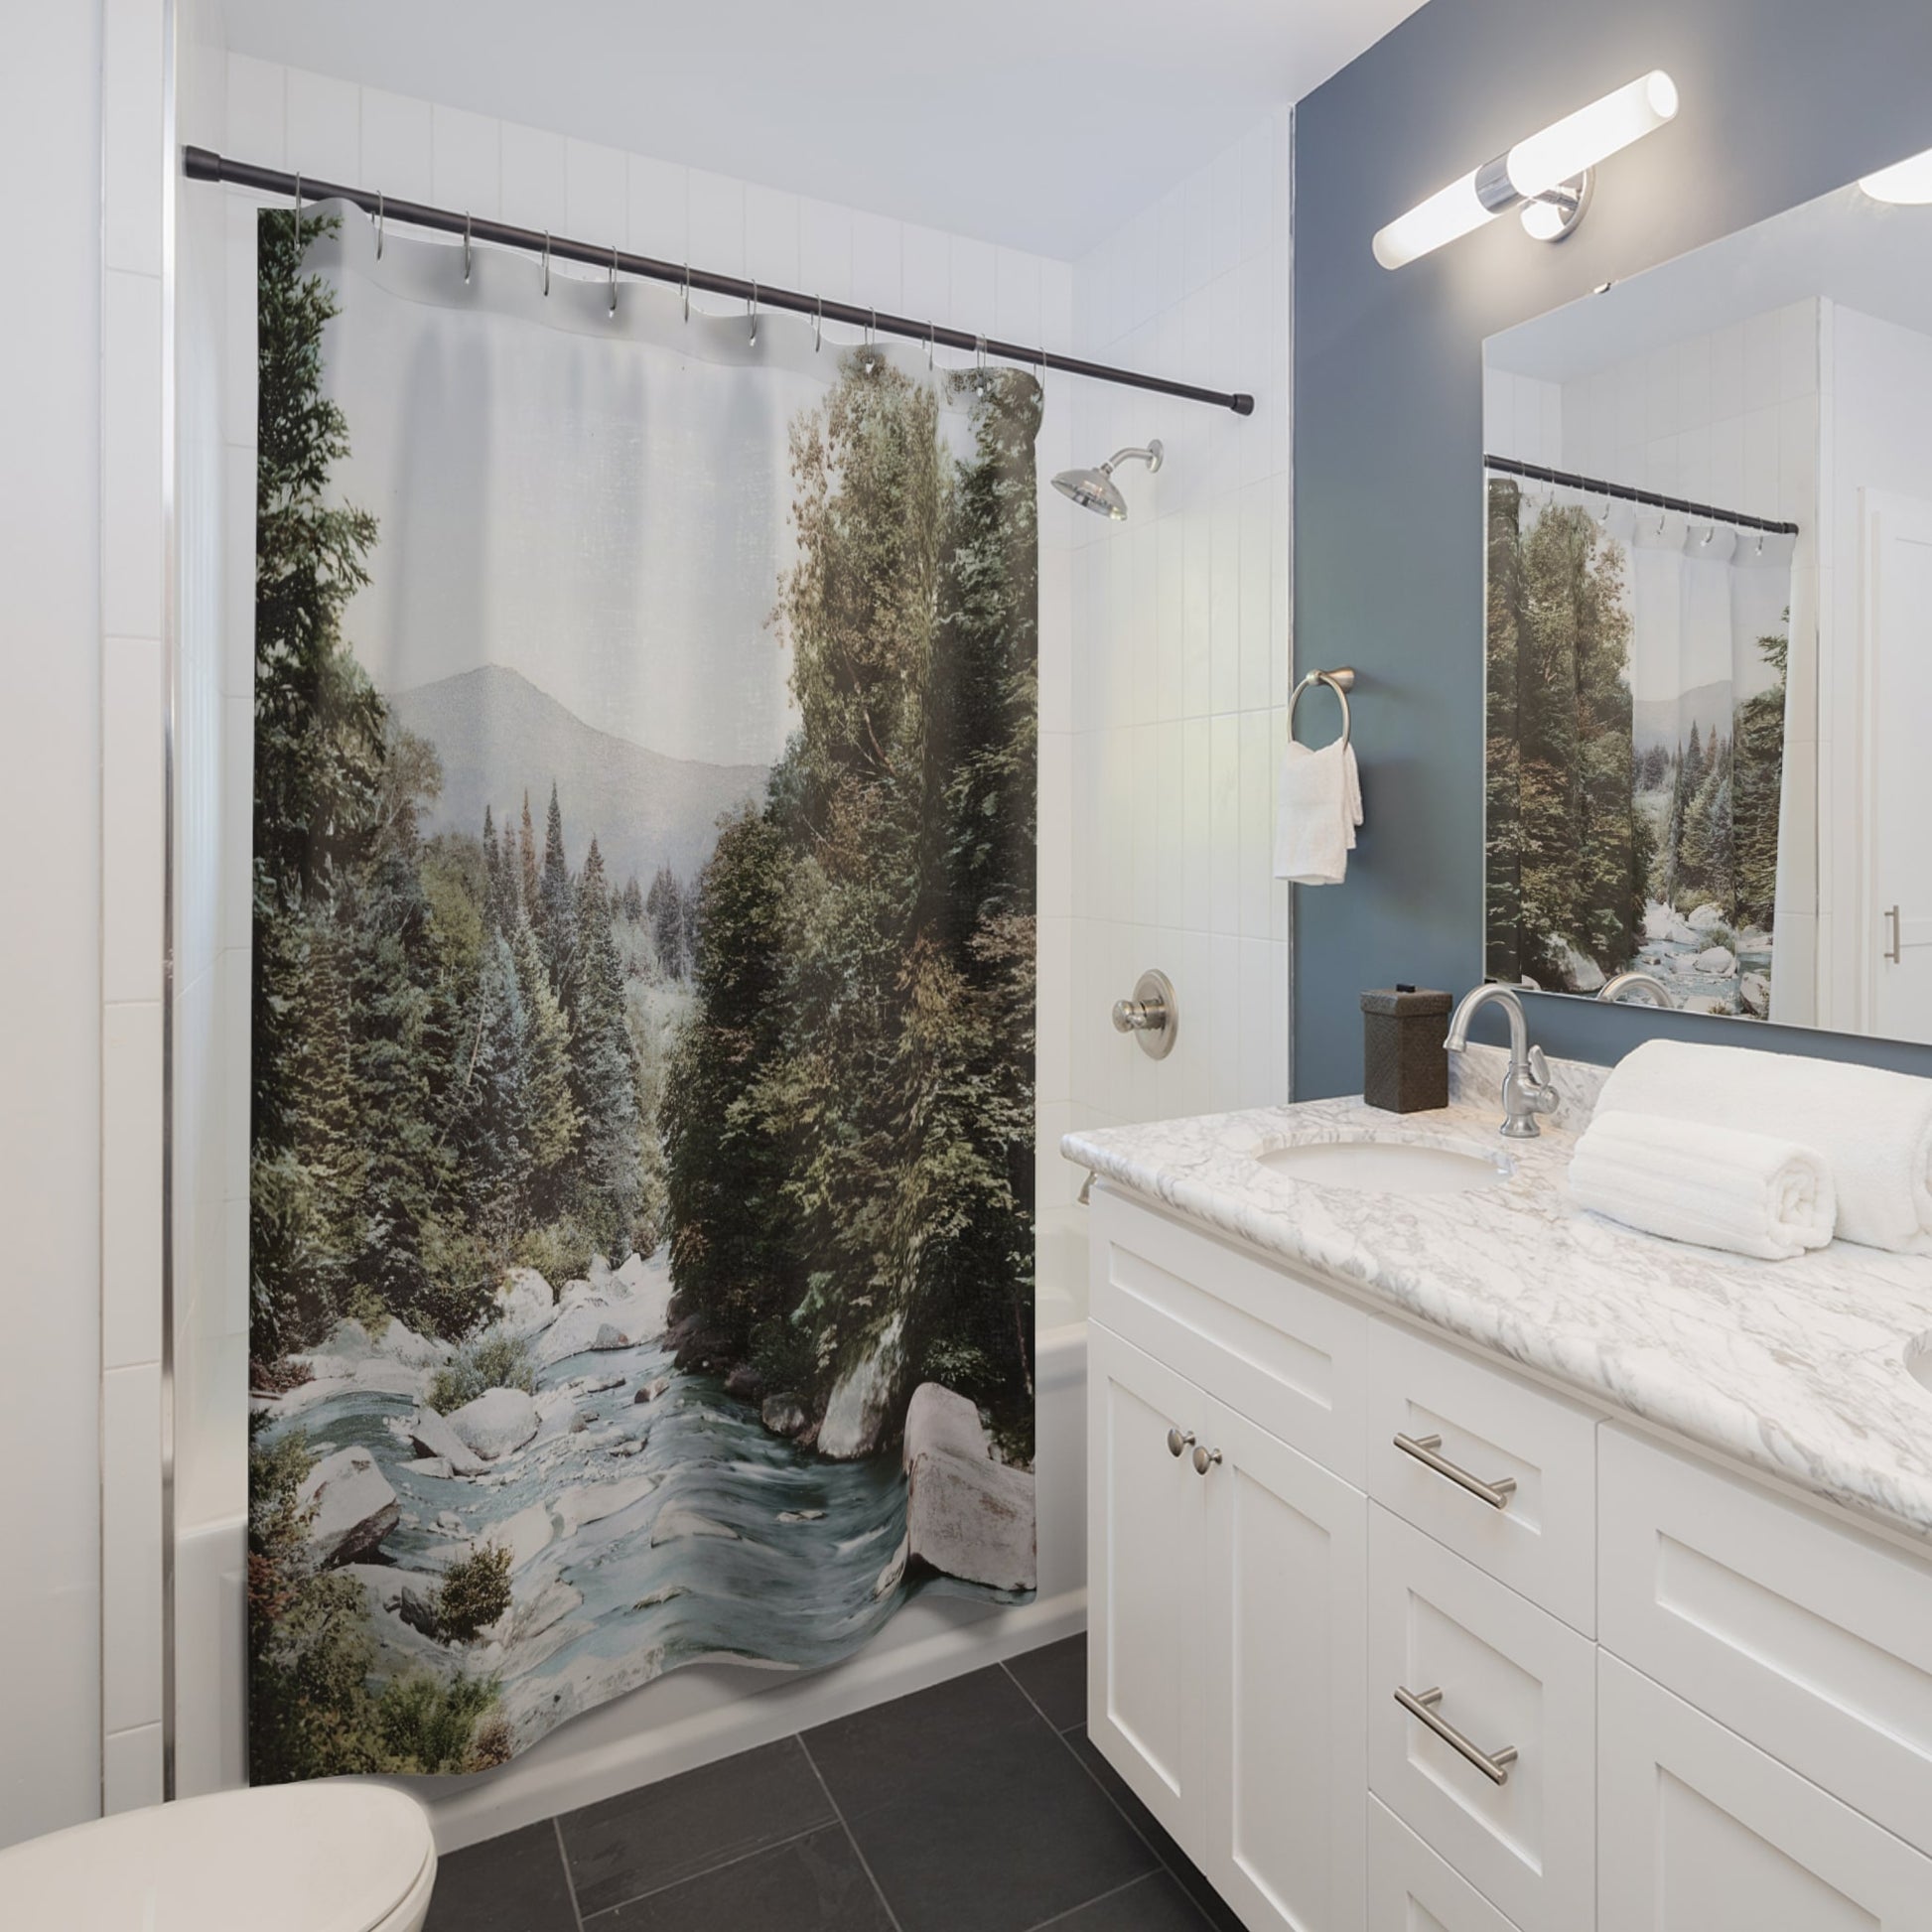 River Shower Curtain Best Bathroom Decorating Ideas for Landscapes Decor